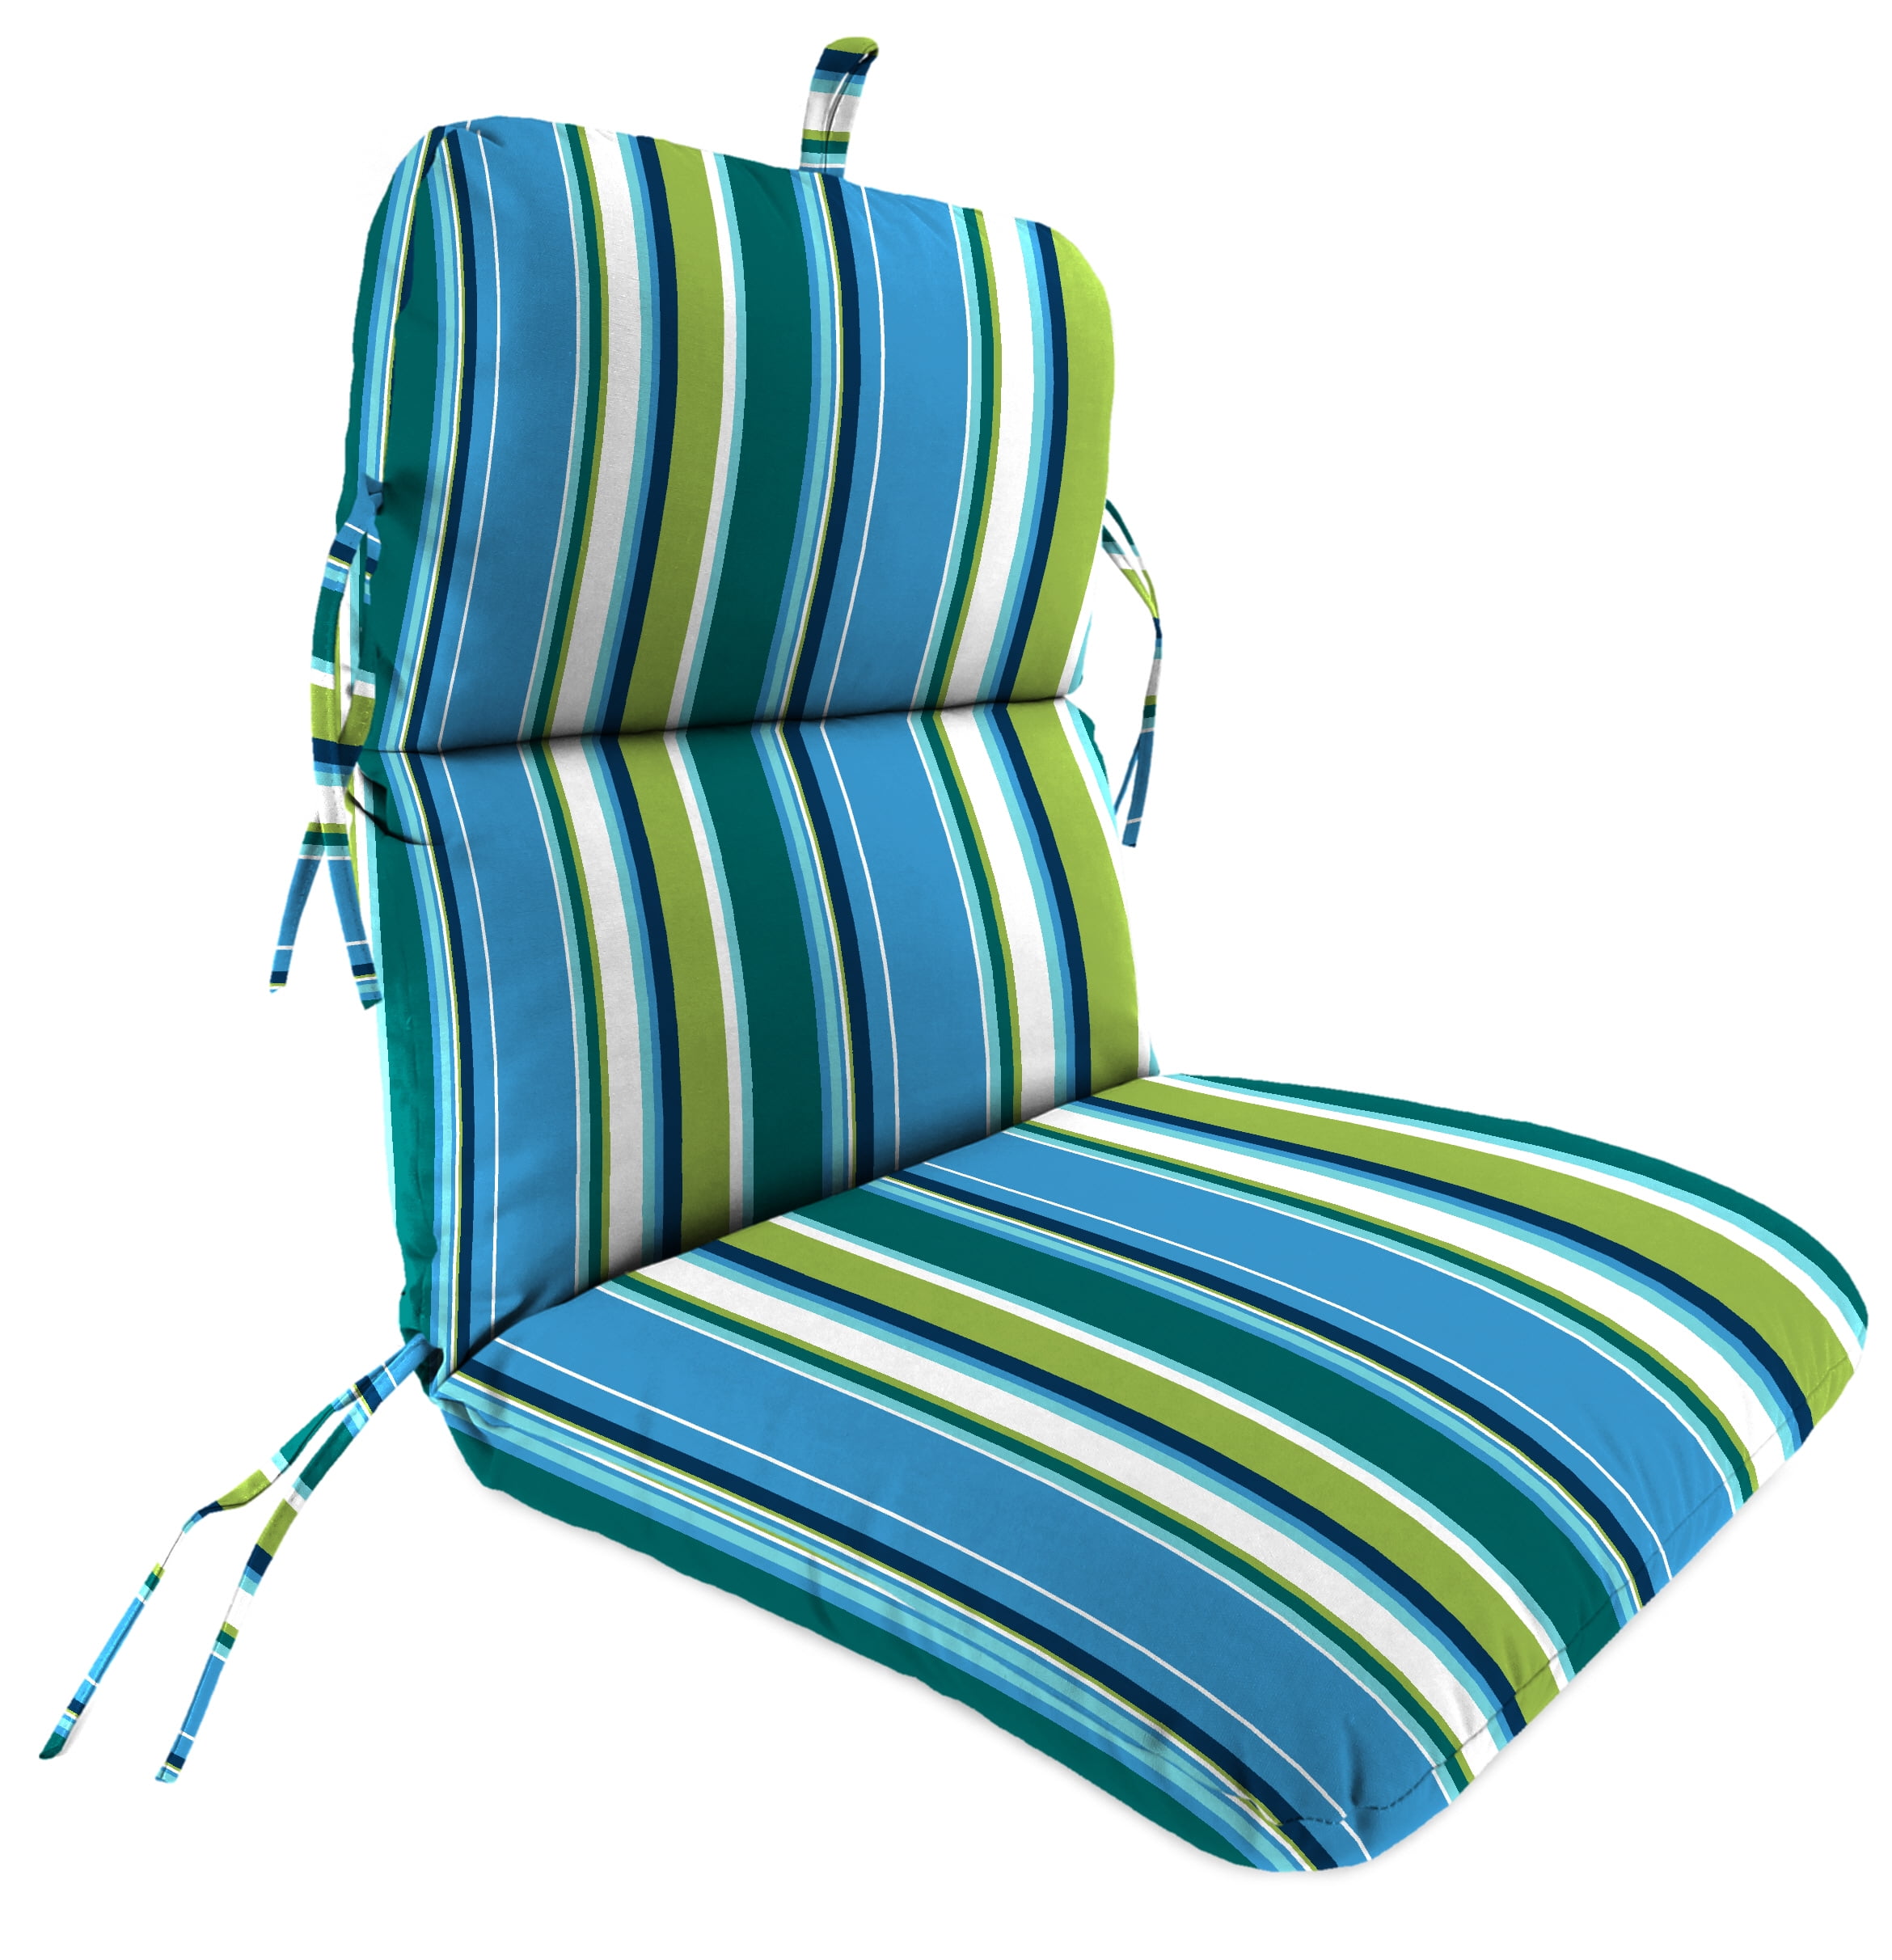 Aoodor Patio Furniture 46” x 18” x 3.1” Outdoor Bench Cushion 